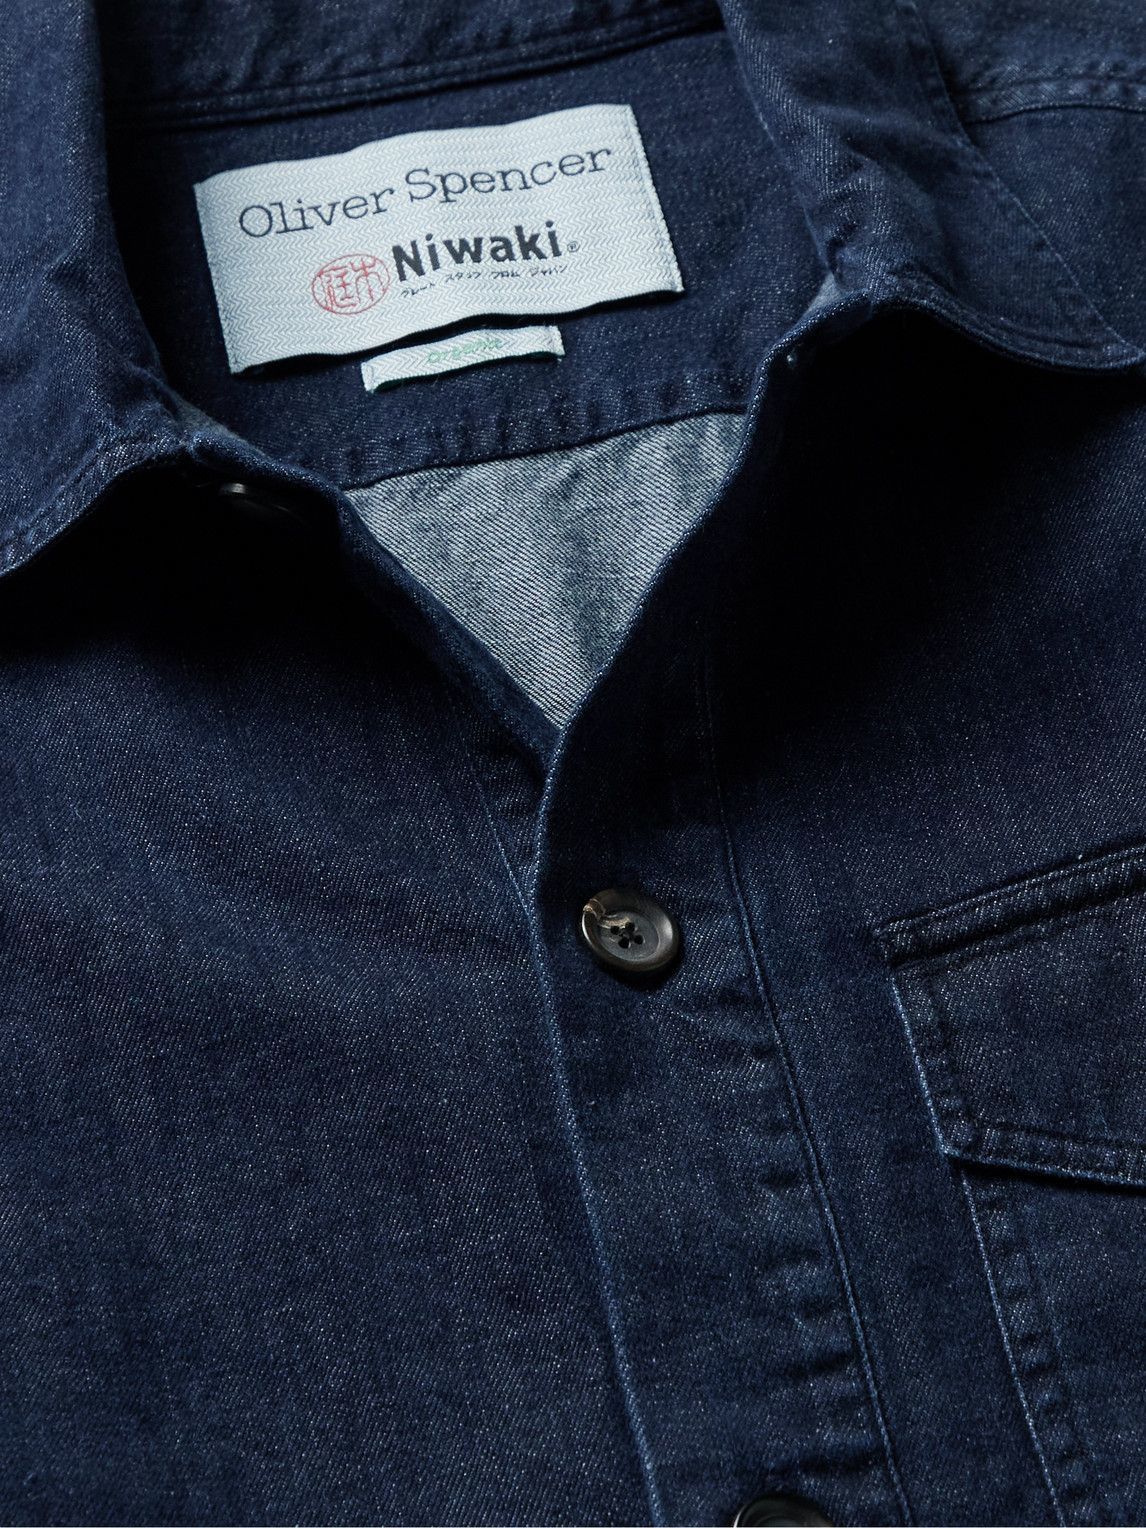 Oliver Spencer - Niwaki Hortus Organic Denim Half-Placket Shirt - Blue